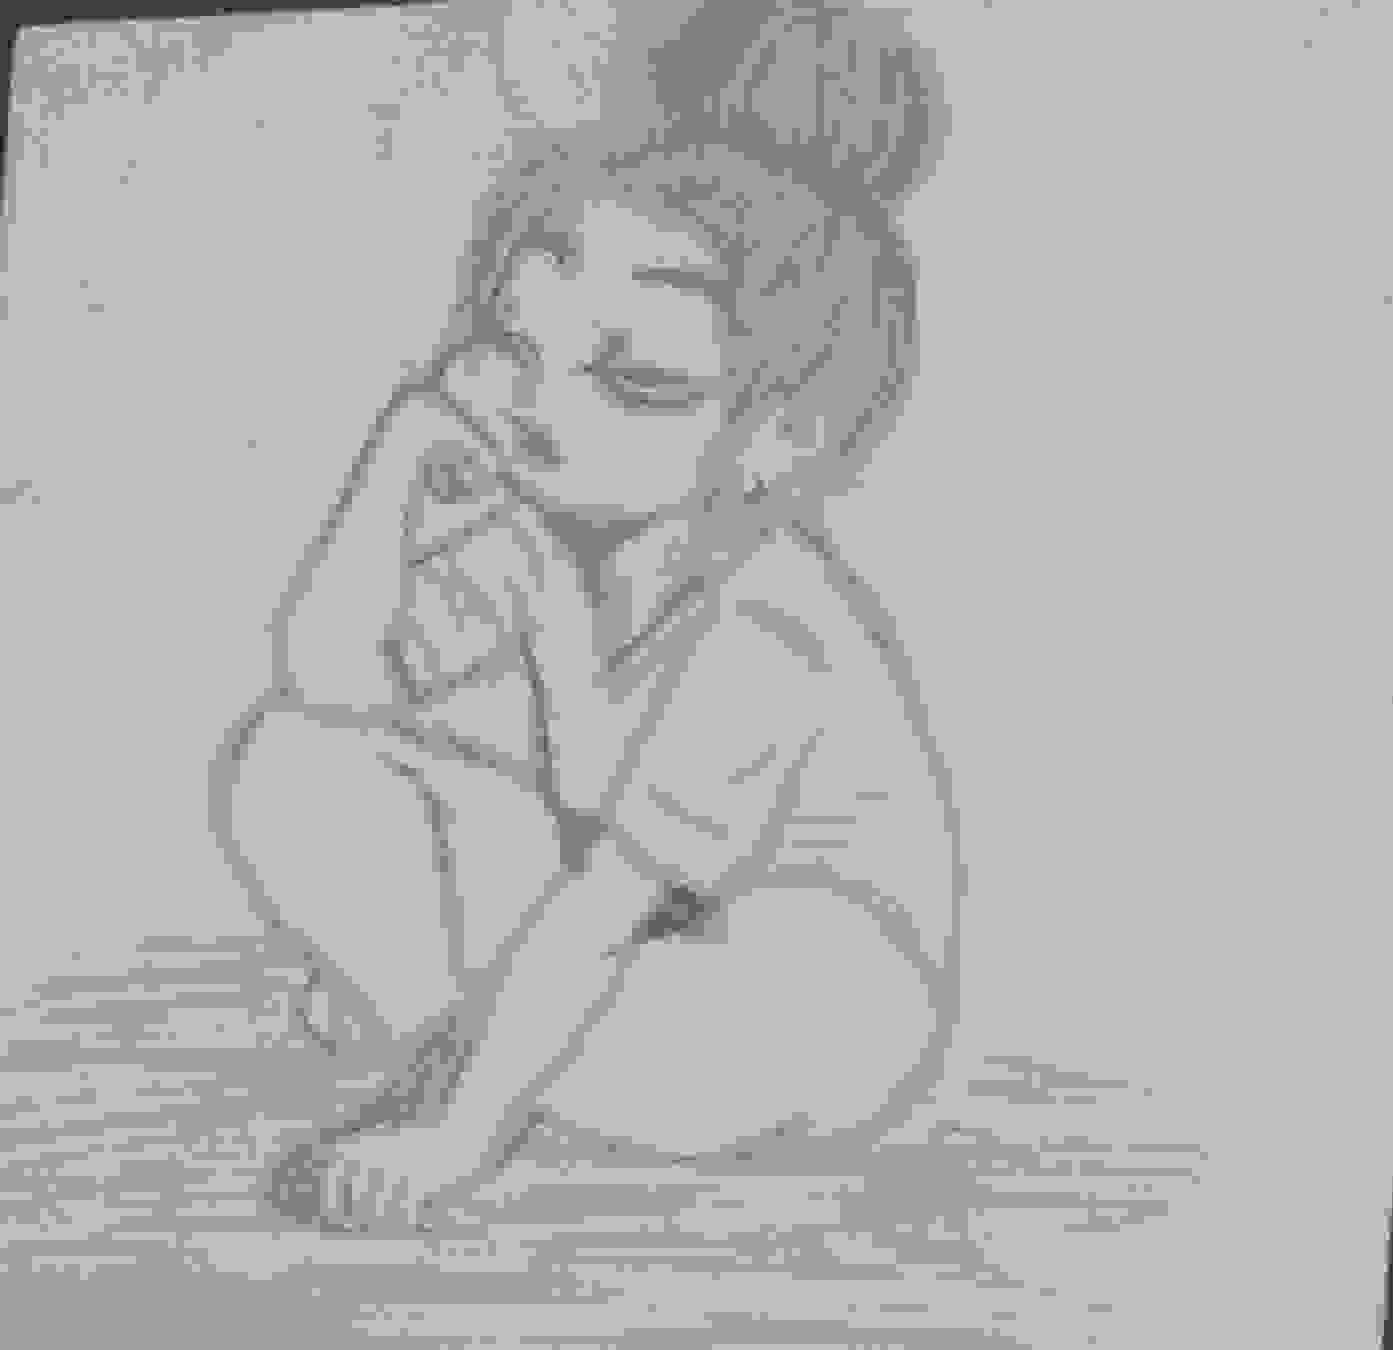 Simple Pencil Sketch Of A Girl Teenage - GranNino